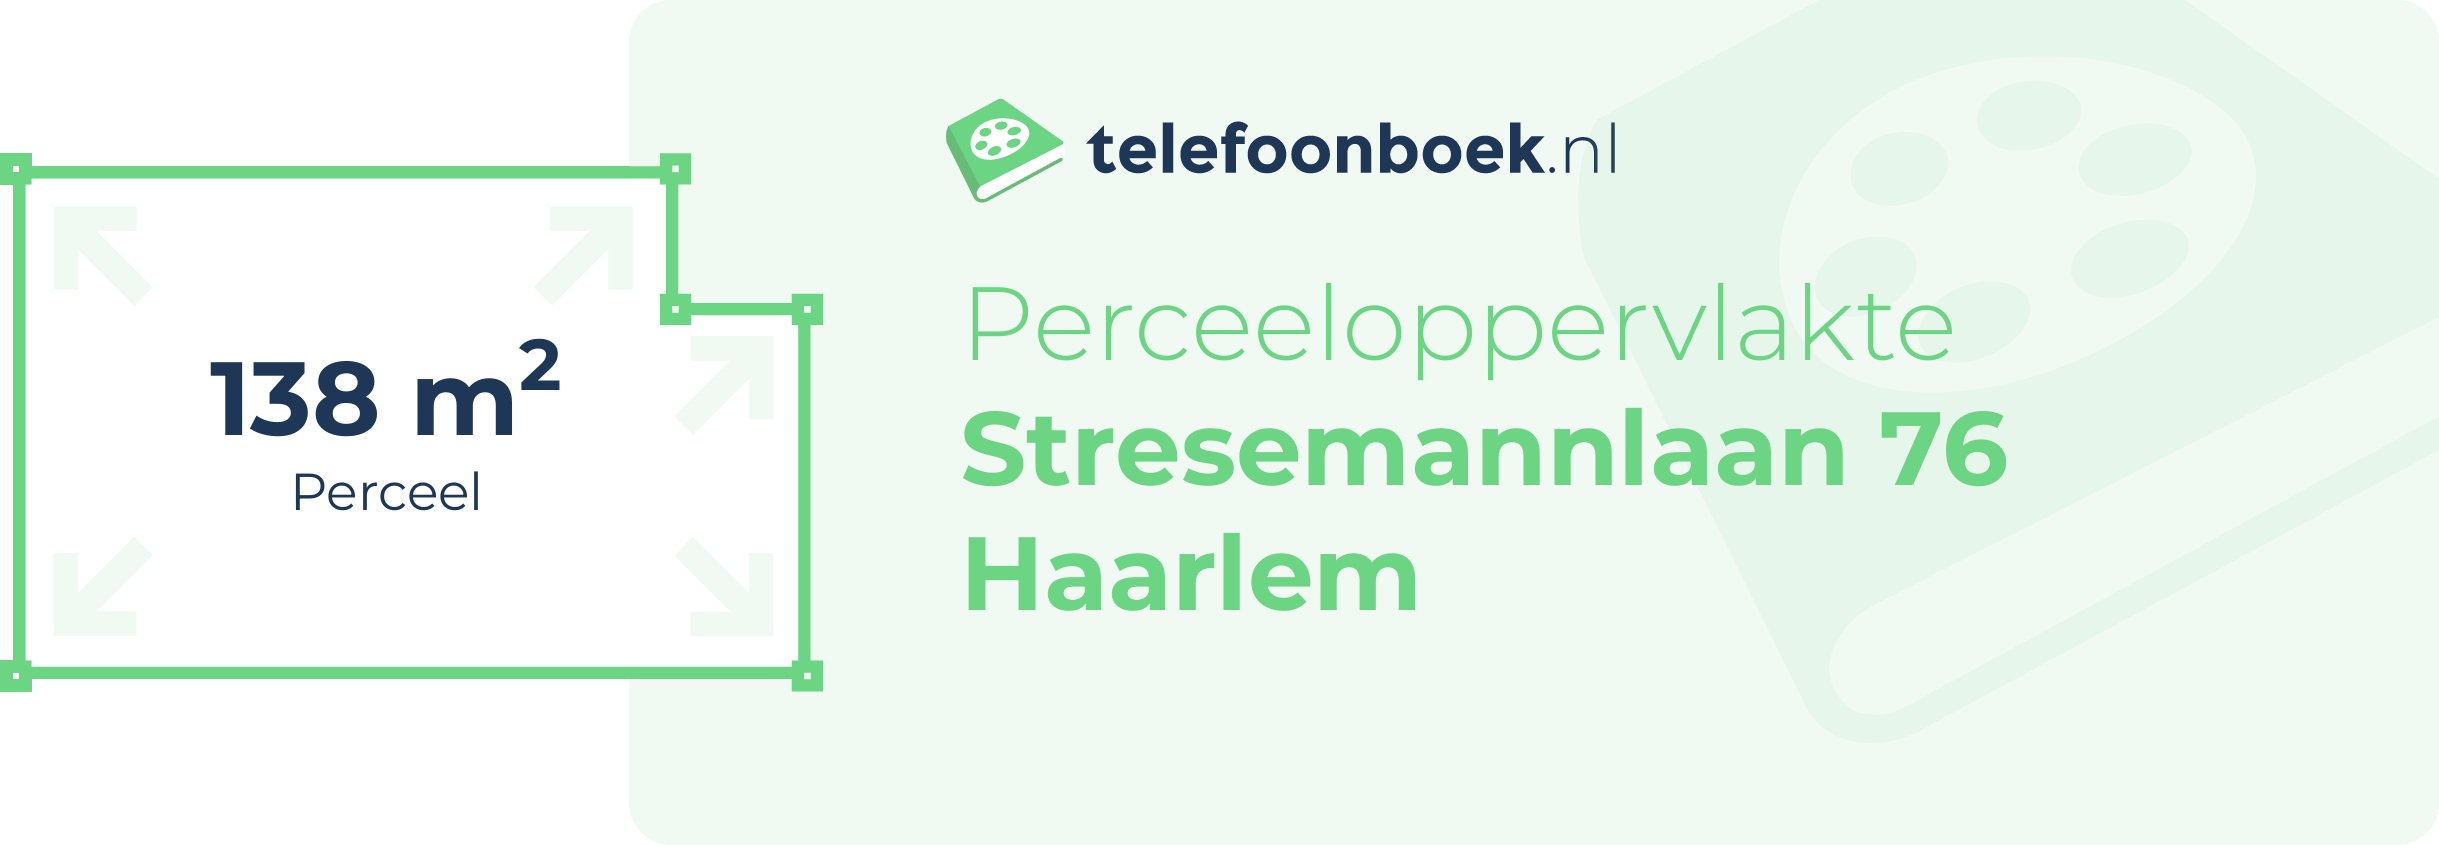 Perceeloppervlakte Stresemannlaan 76 Haarlem